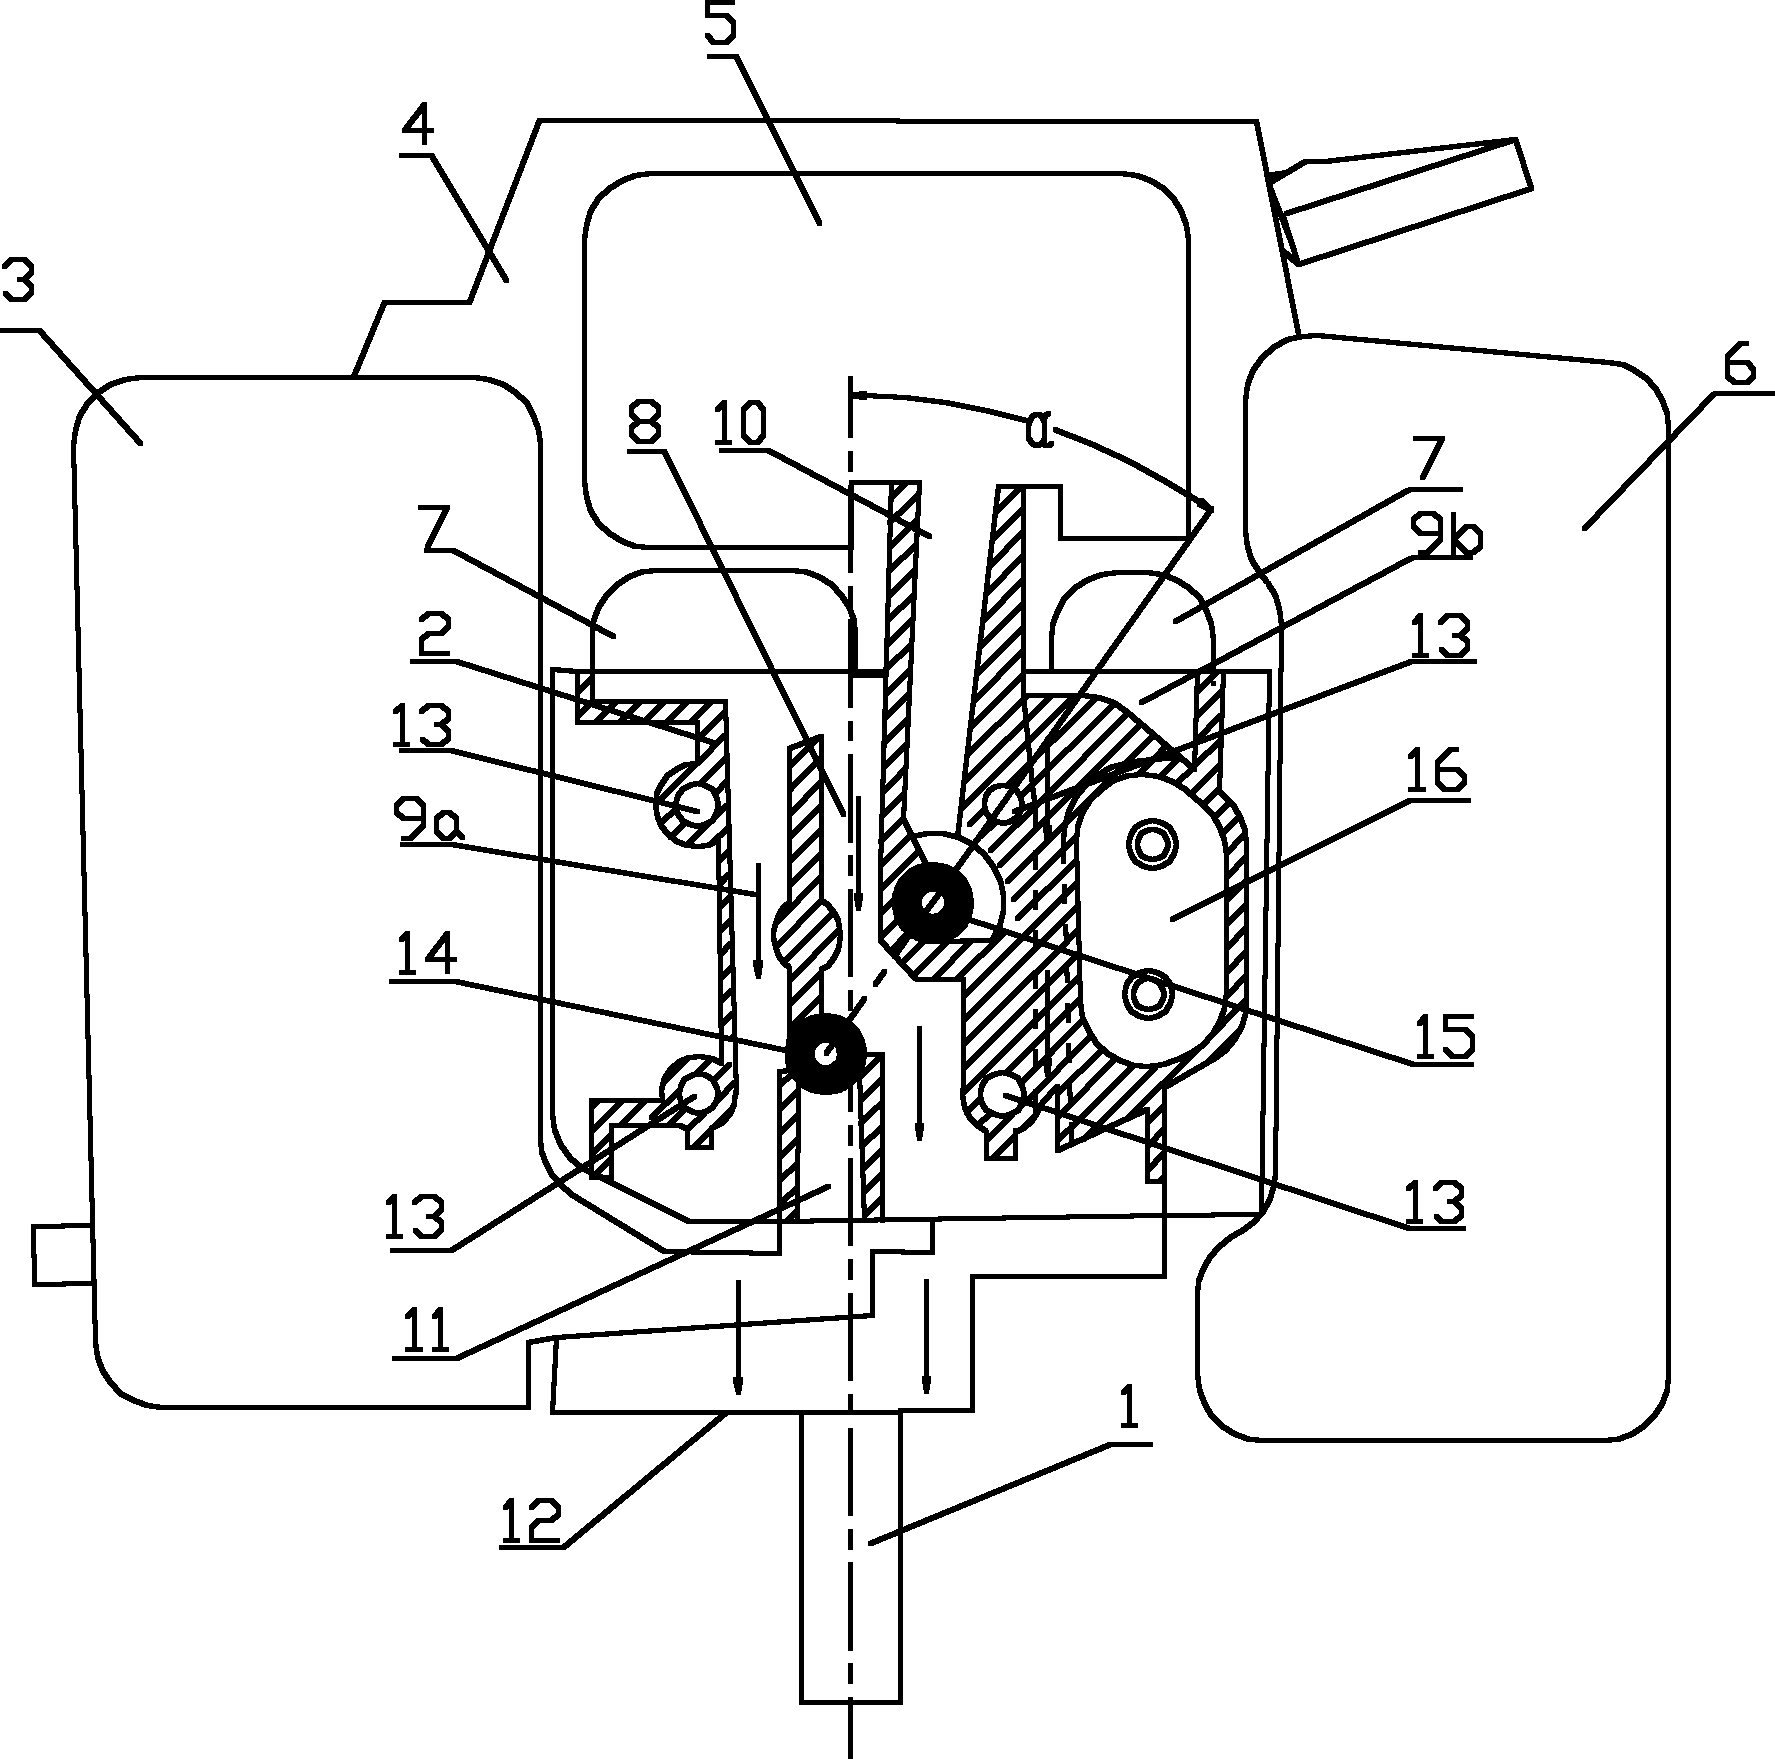 Valve arrangement structure for cylinder head of air-cooled diesel engine